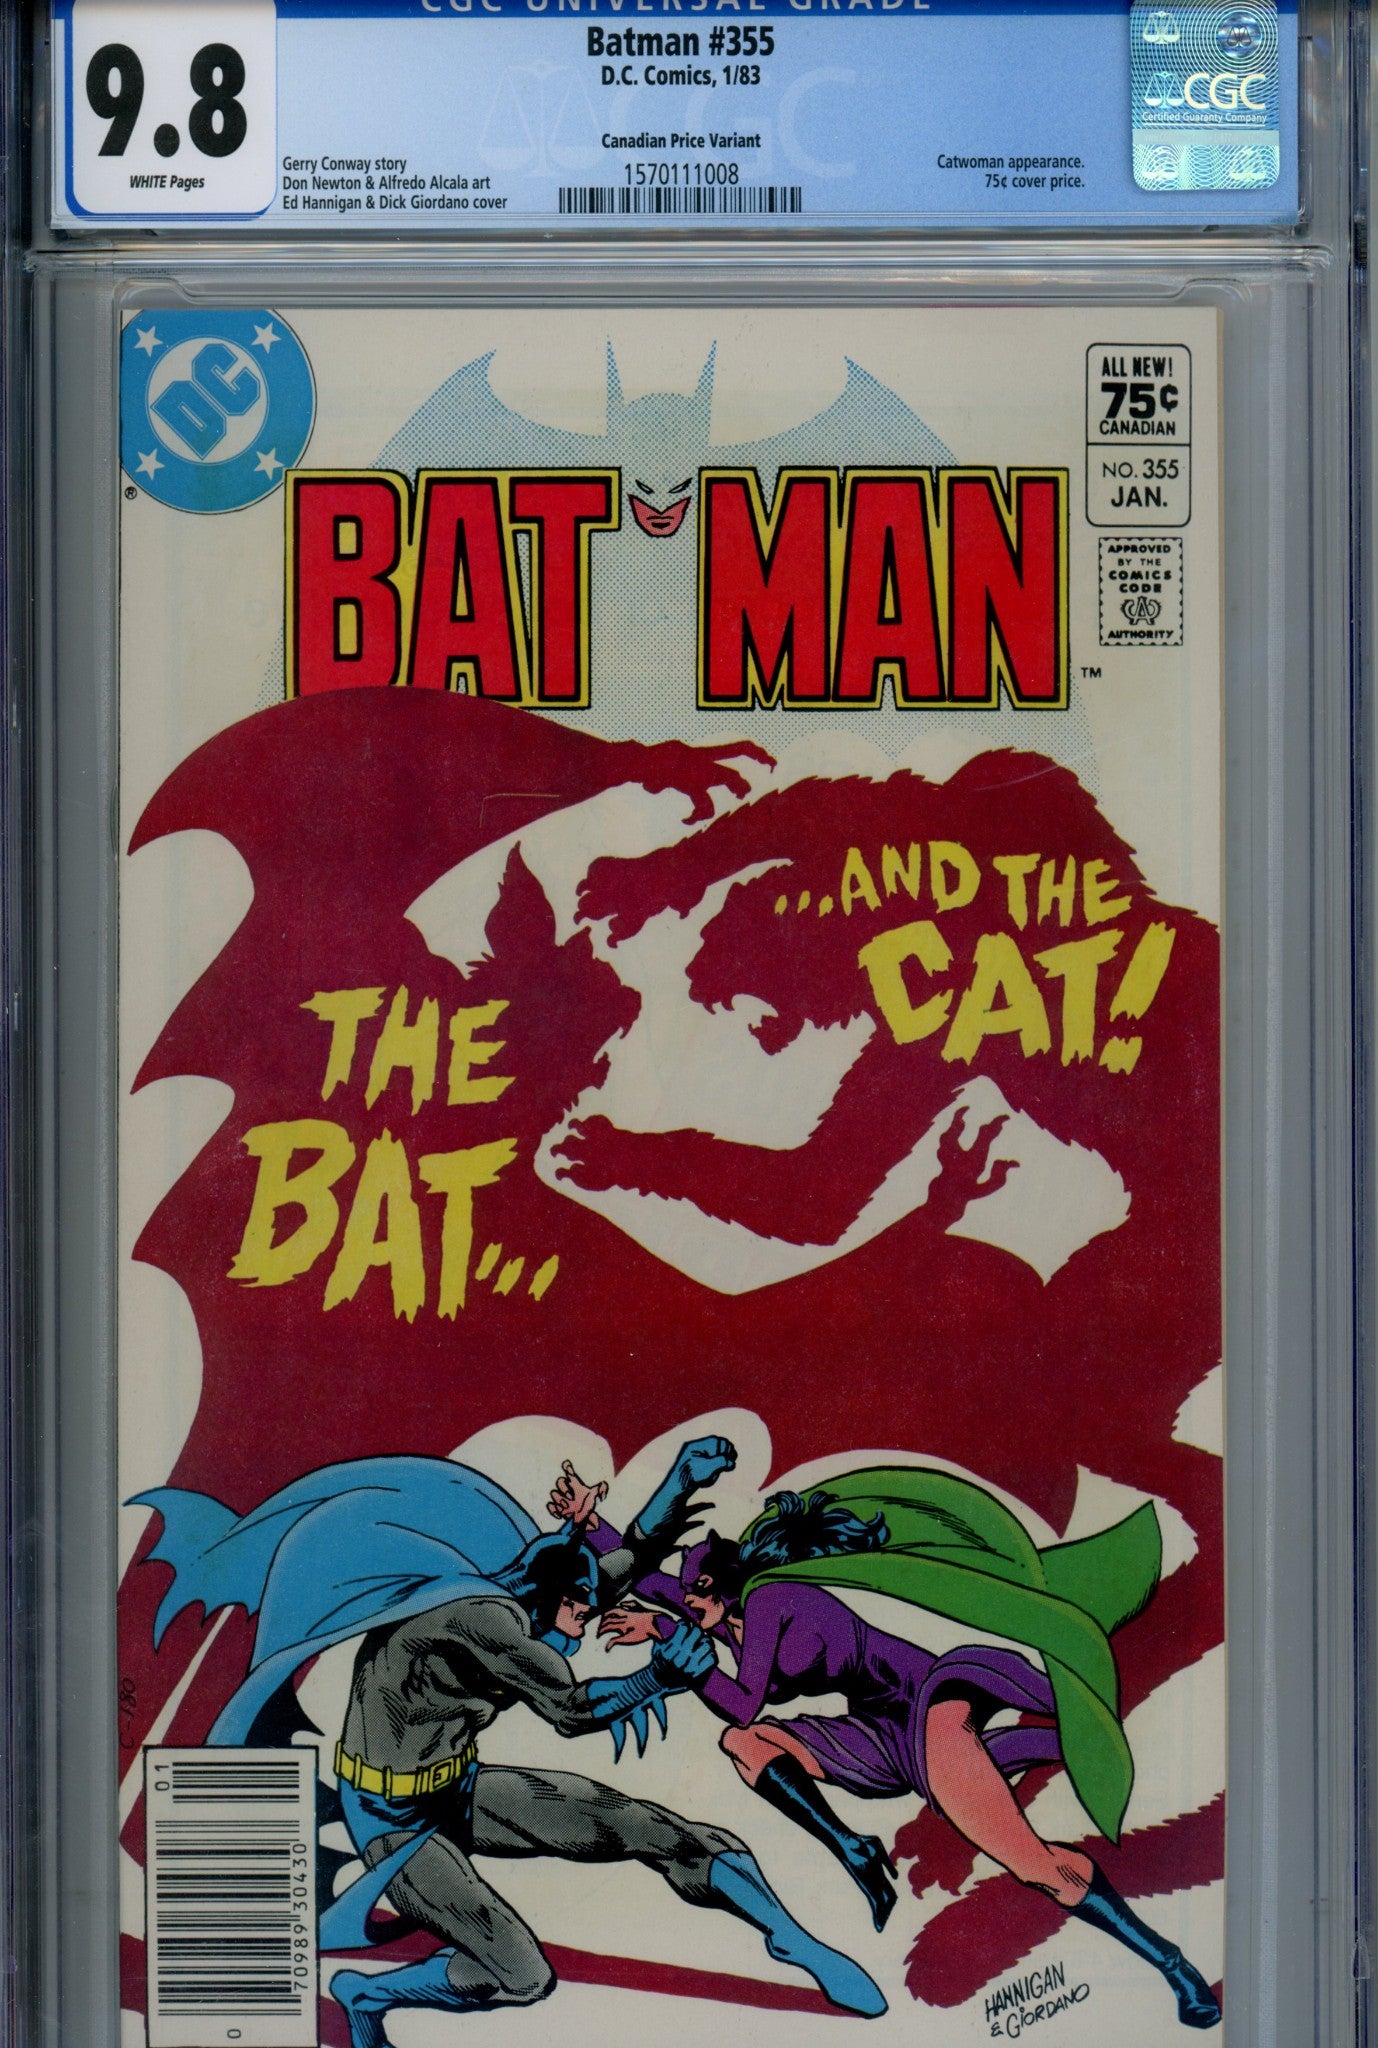 Batman Vol 1 355 Canadian Price Variant CGC 9.8 (1982)